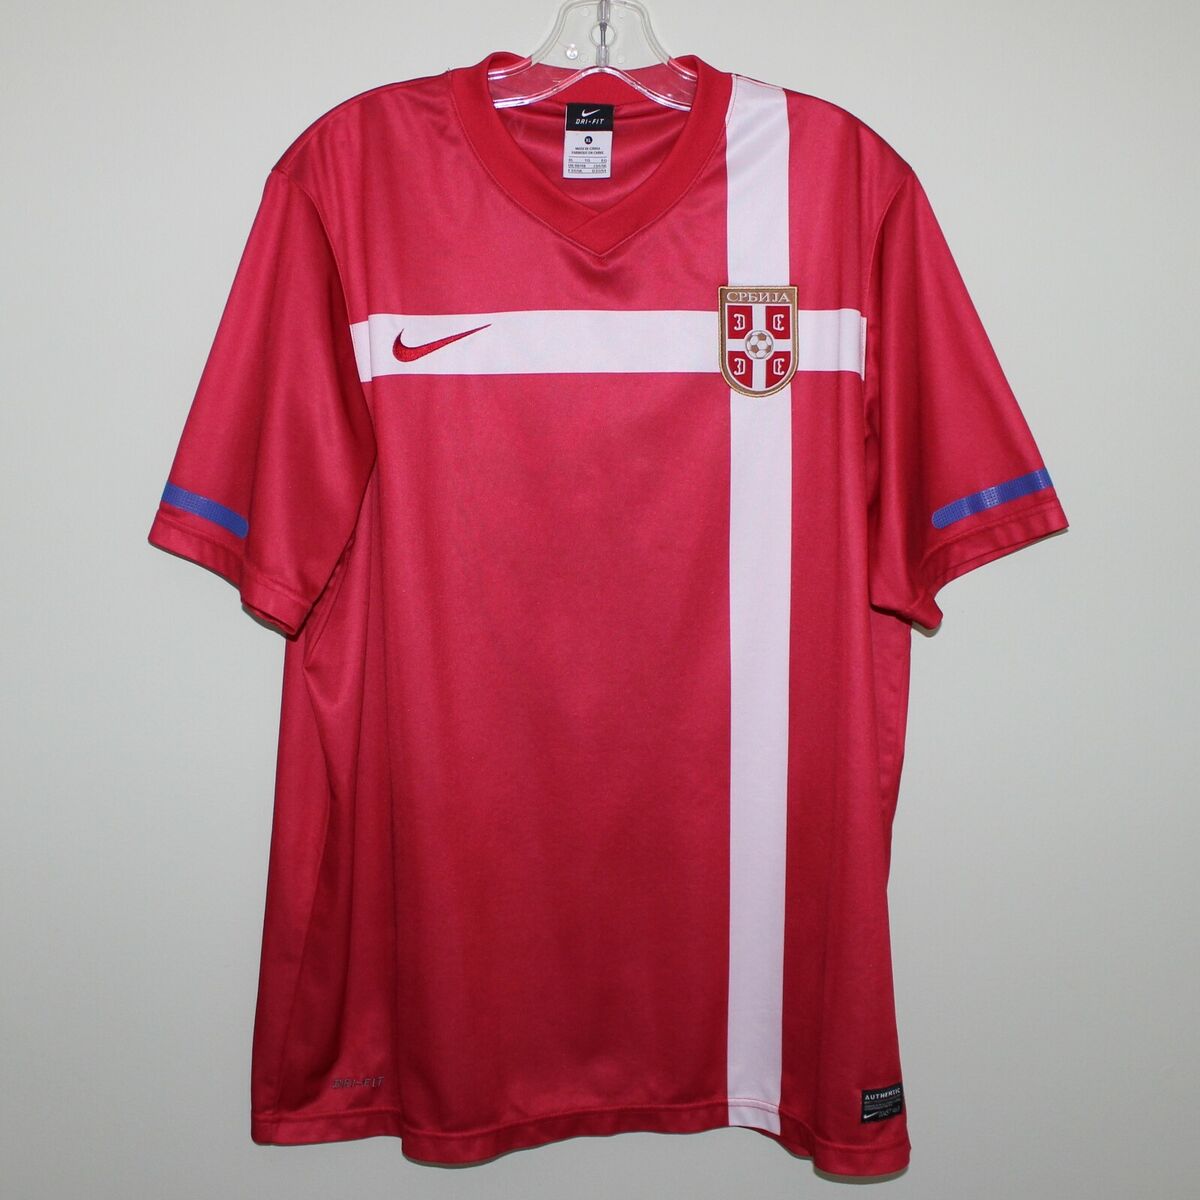 SERBIA Србија 2010-11 home football shirt Nike jersey World Cup Орлови | eBay